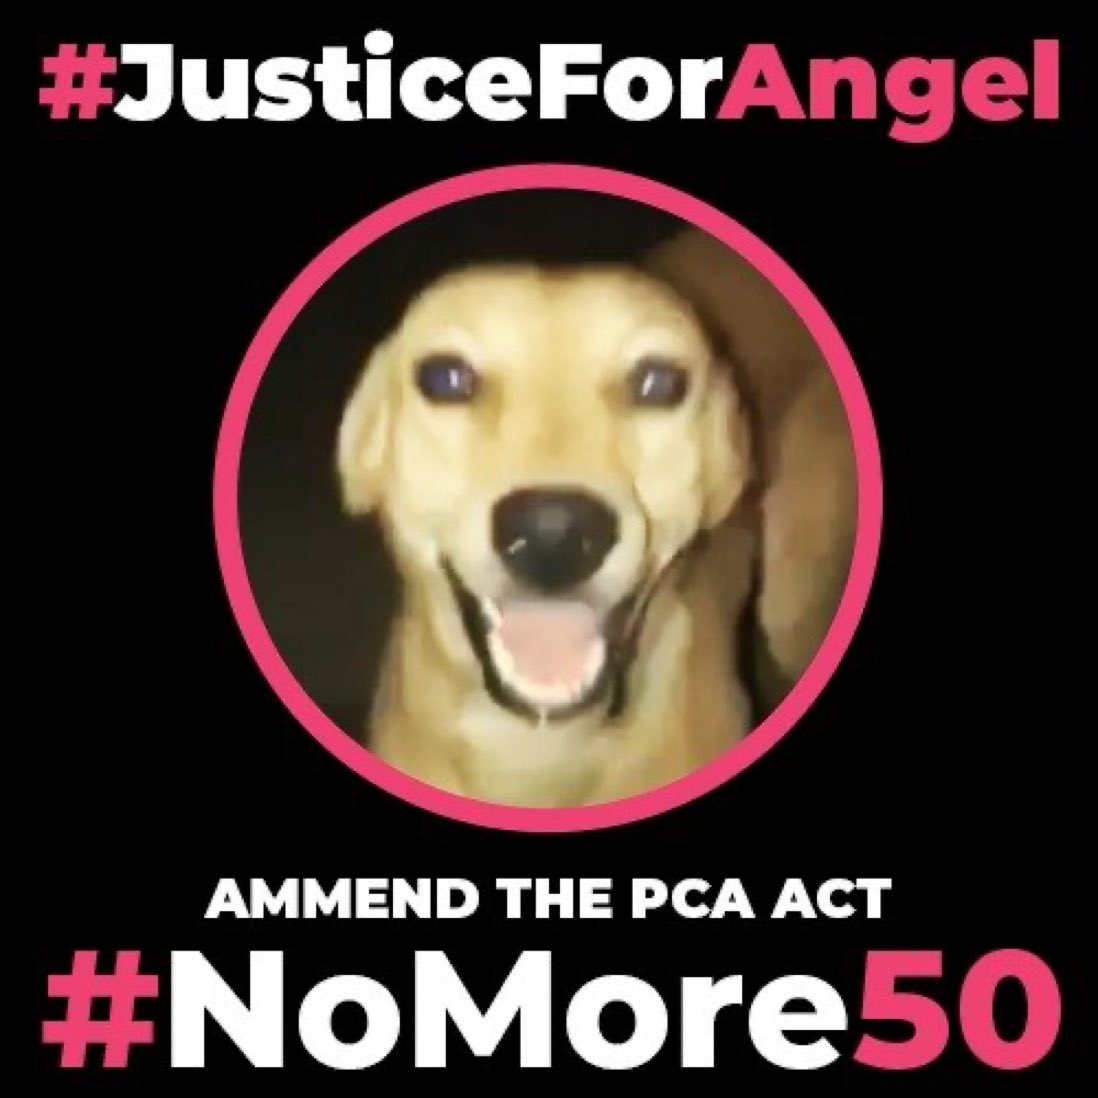 It’s a shame to be in society where we can’t even value the purest creatures of god i.e. animals. #NoMore50 #JusticeForAngel @pfaindia @pfaindia @VeganIndiaMovt @narendramodi 
#StopAnimalCruelty